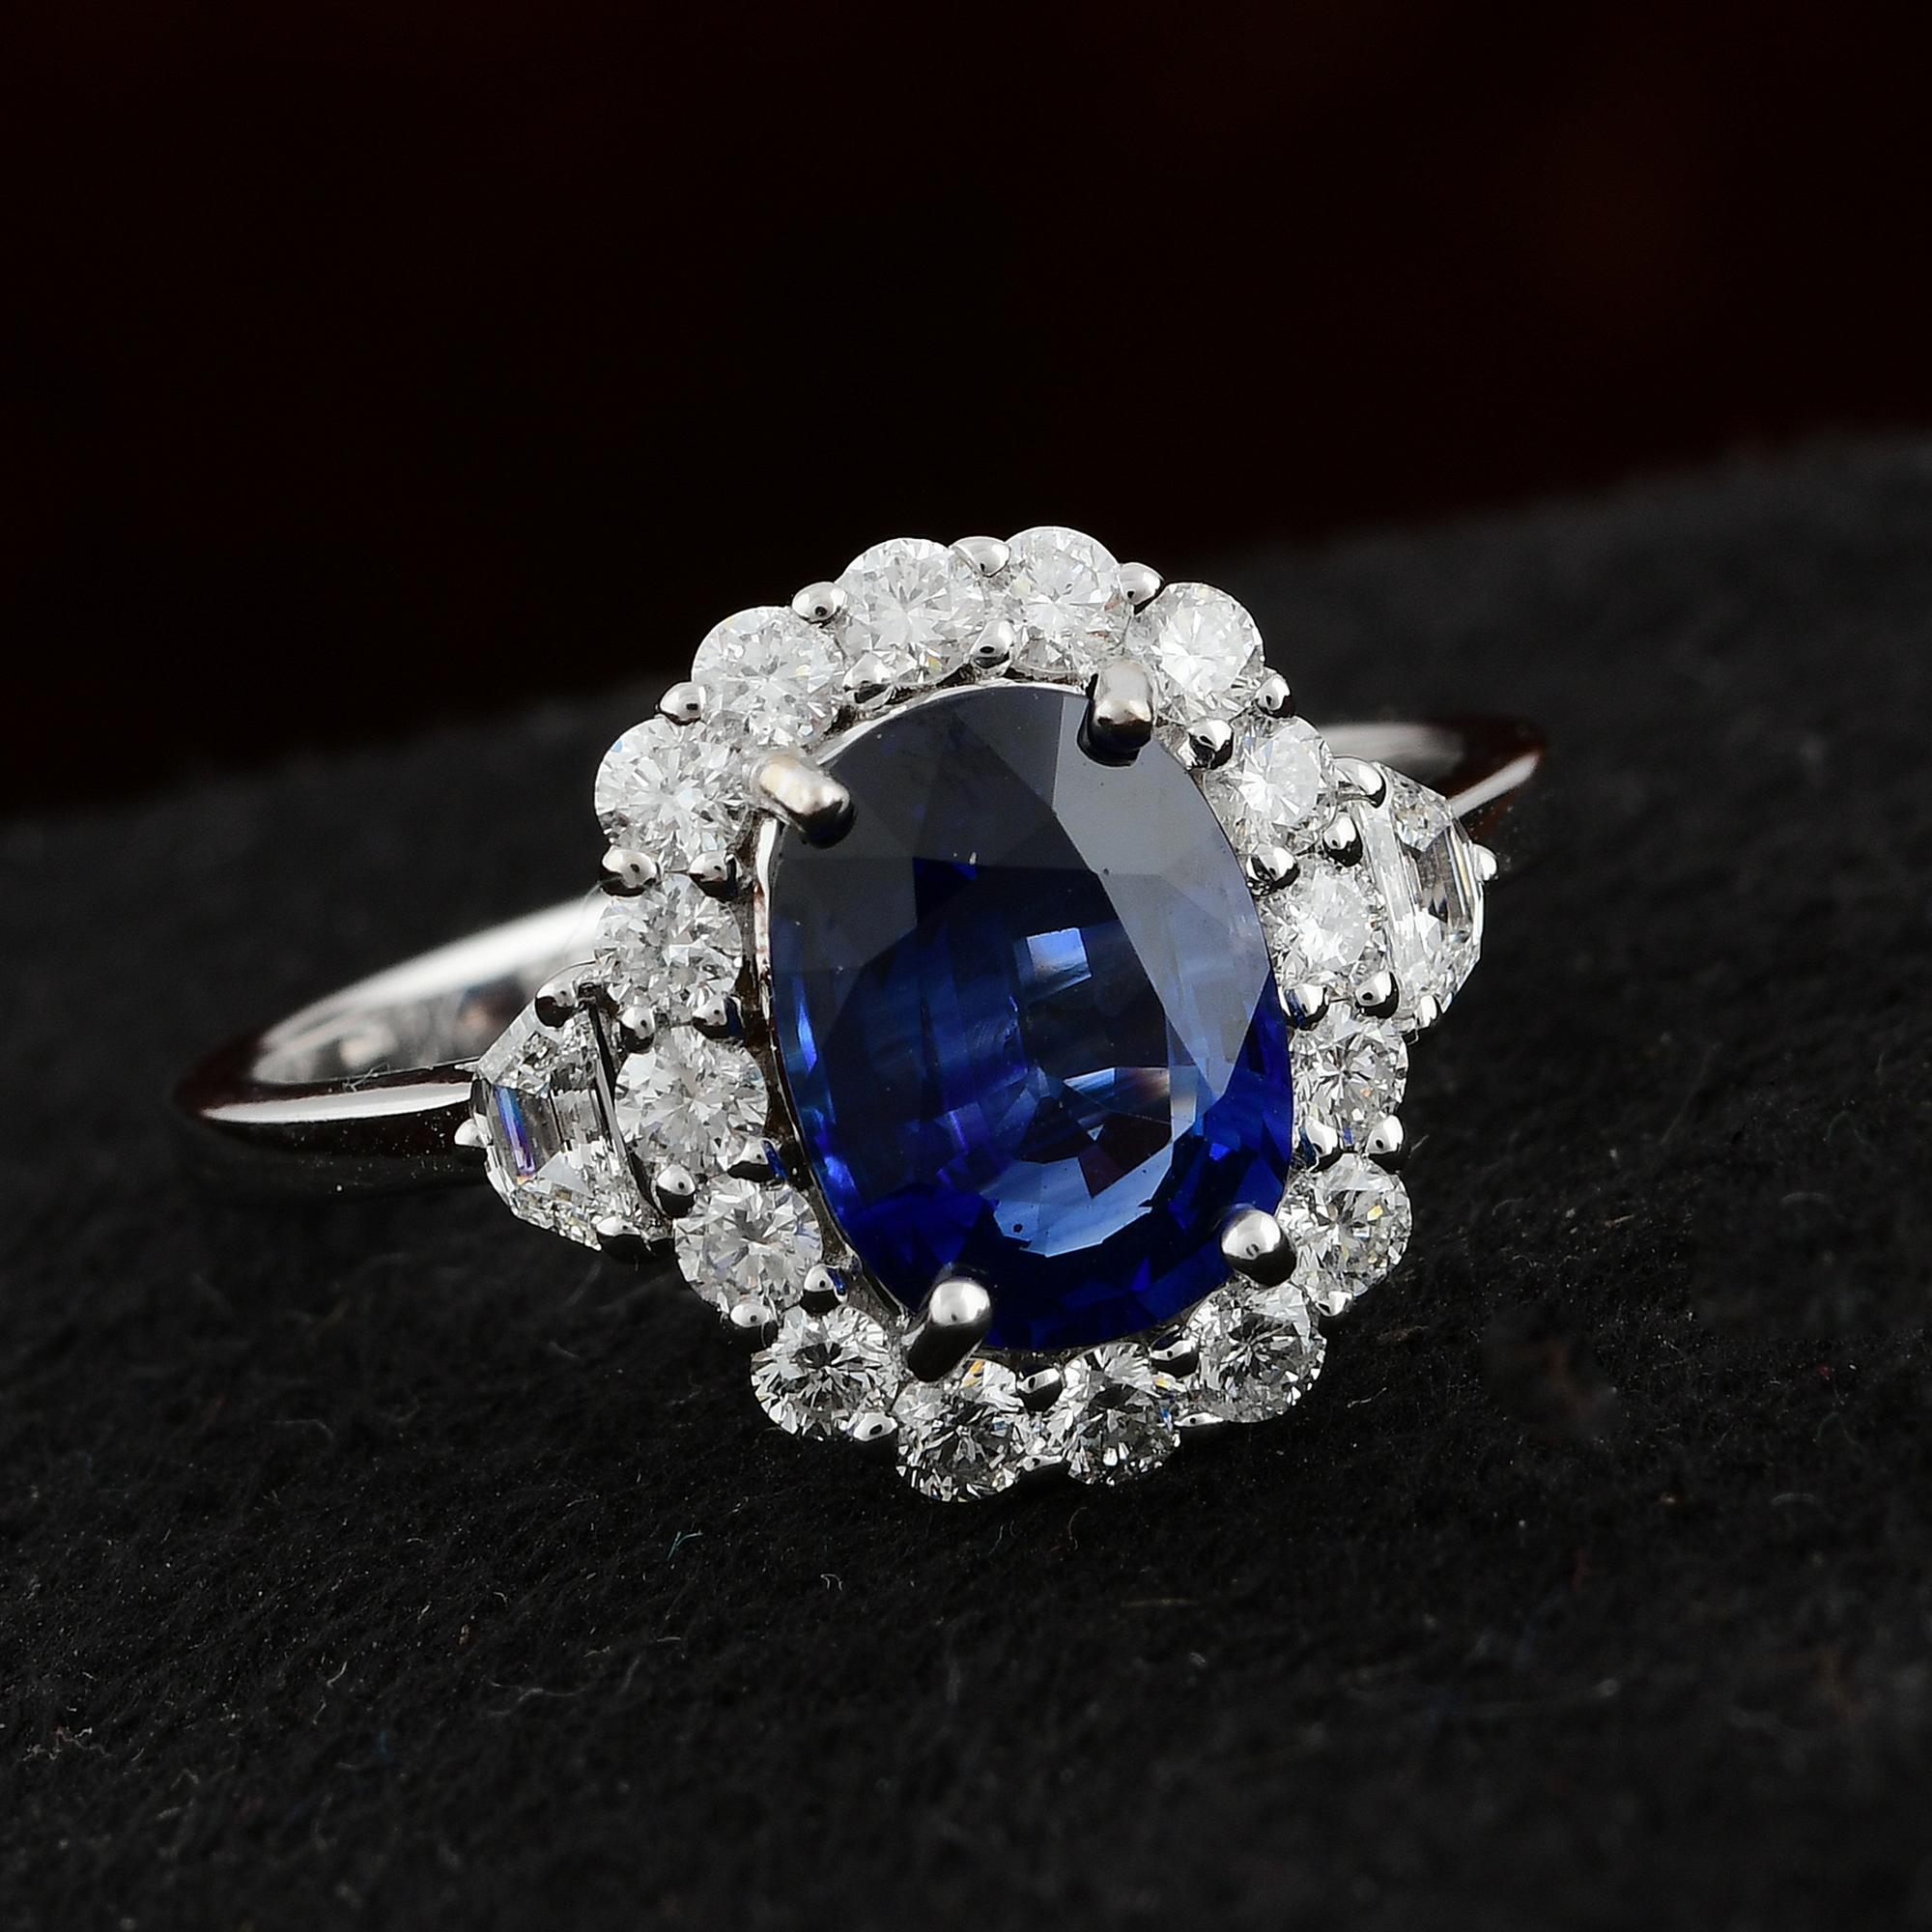 Oval Cut Blue Sapphire Gemstone Cocktail Ring Diamond 18 Karat White Gold Fine Jewelry For Sale